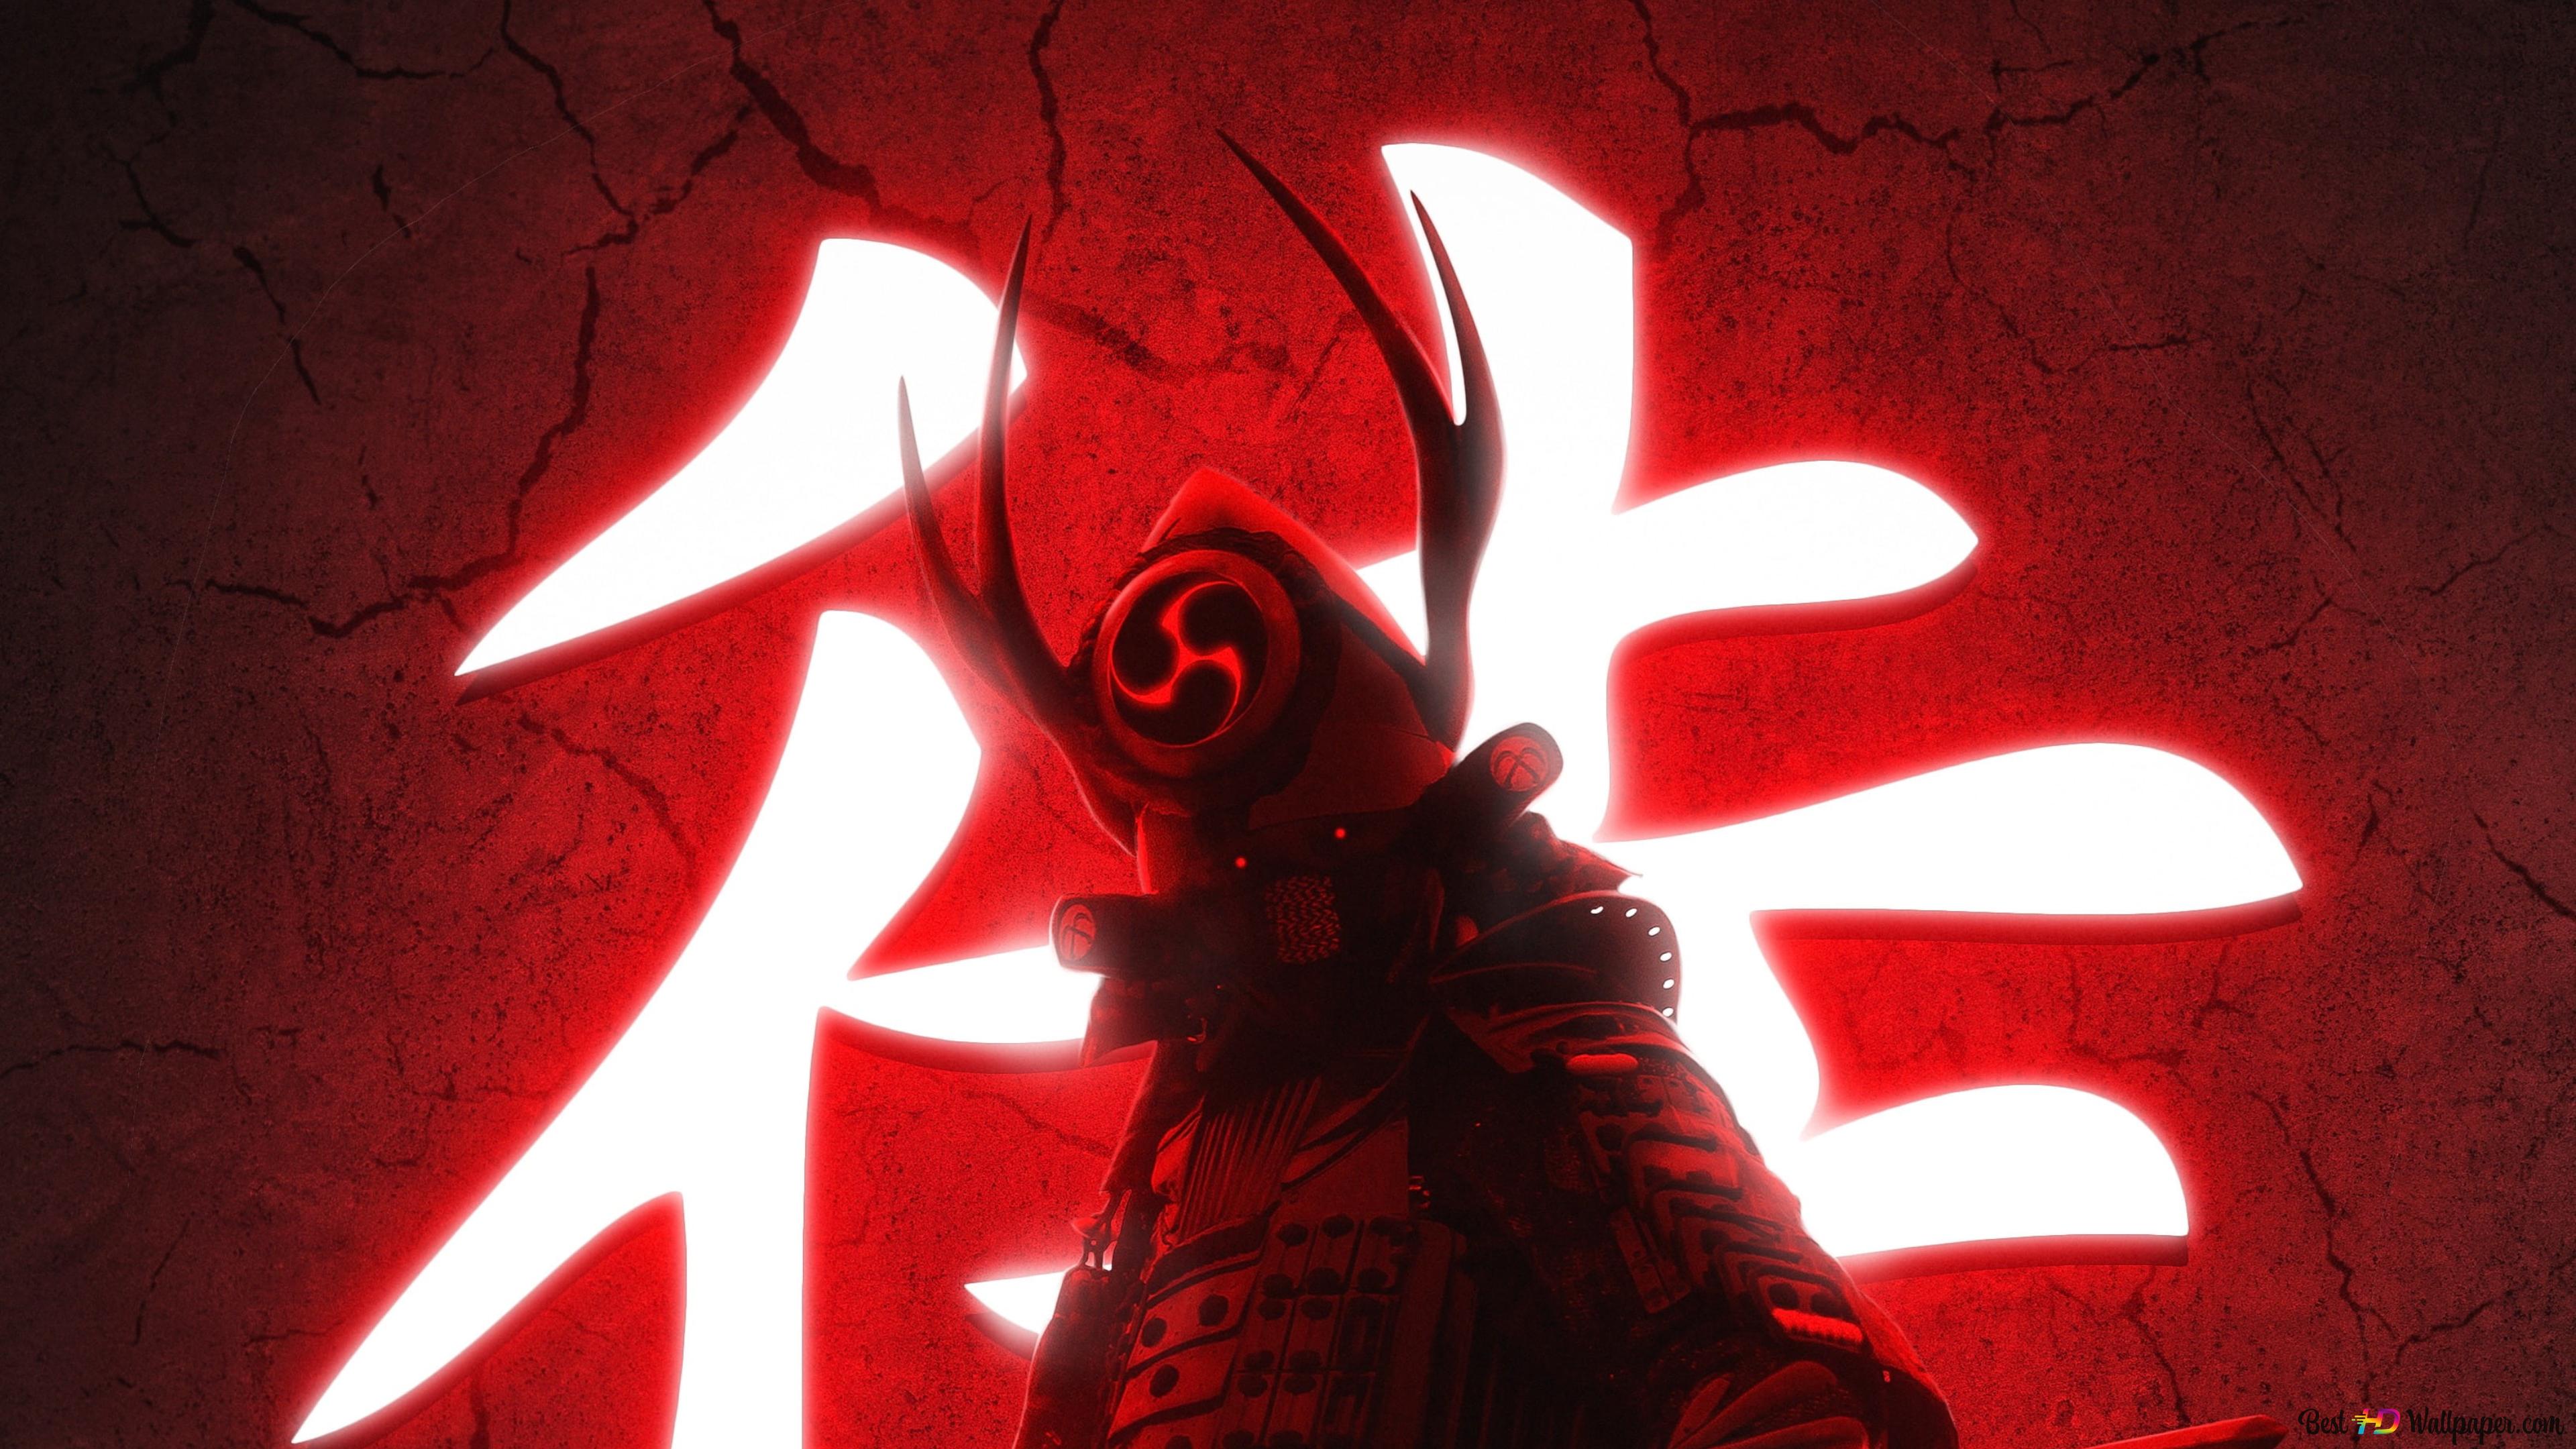 Samurai Armor behind red neon 4K wallpaper download